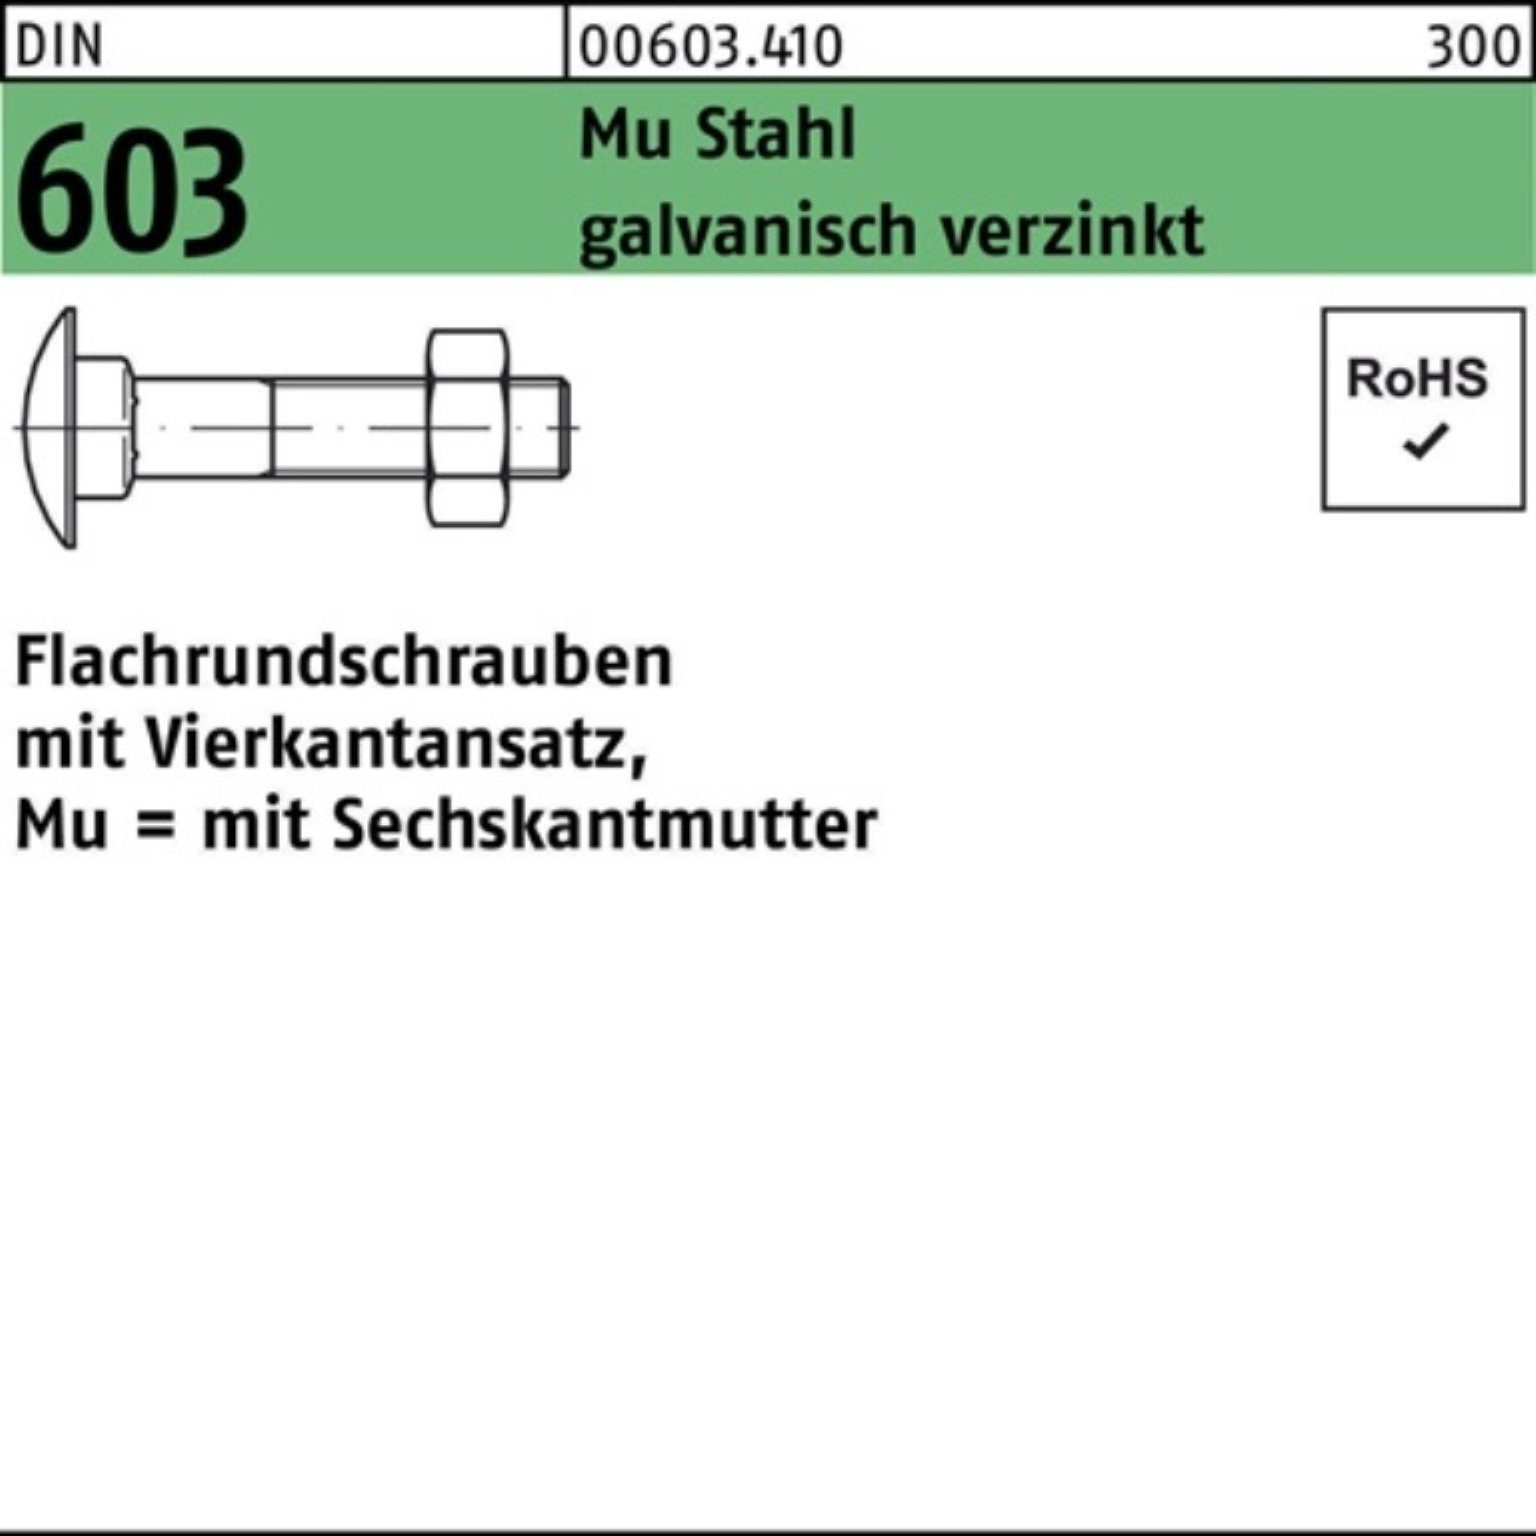 100er Vierkantansatz/6-ktmutter Pack Schraube Flachrundschraube 603 M20x280 DIN Reyher